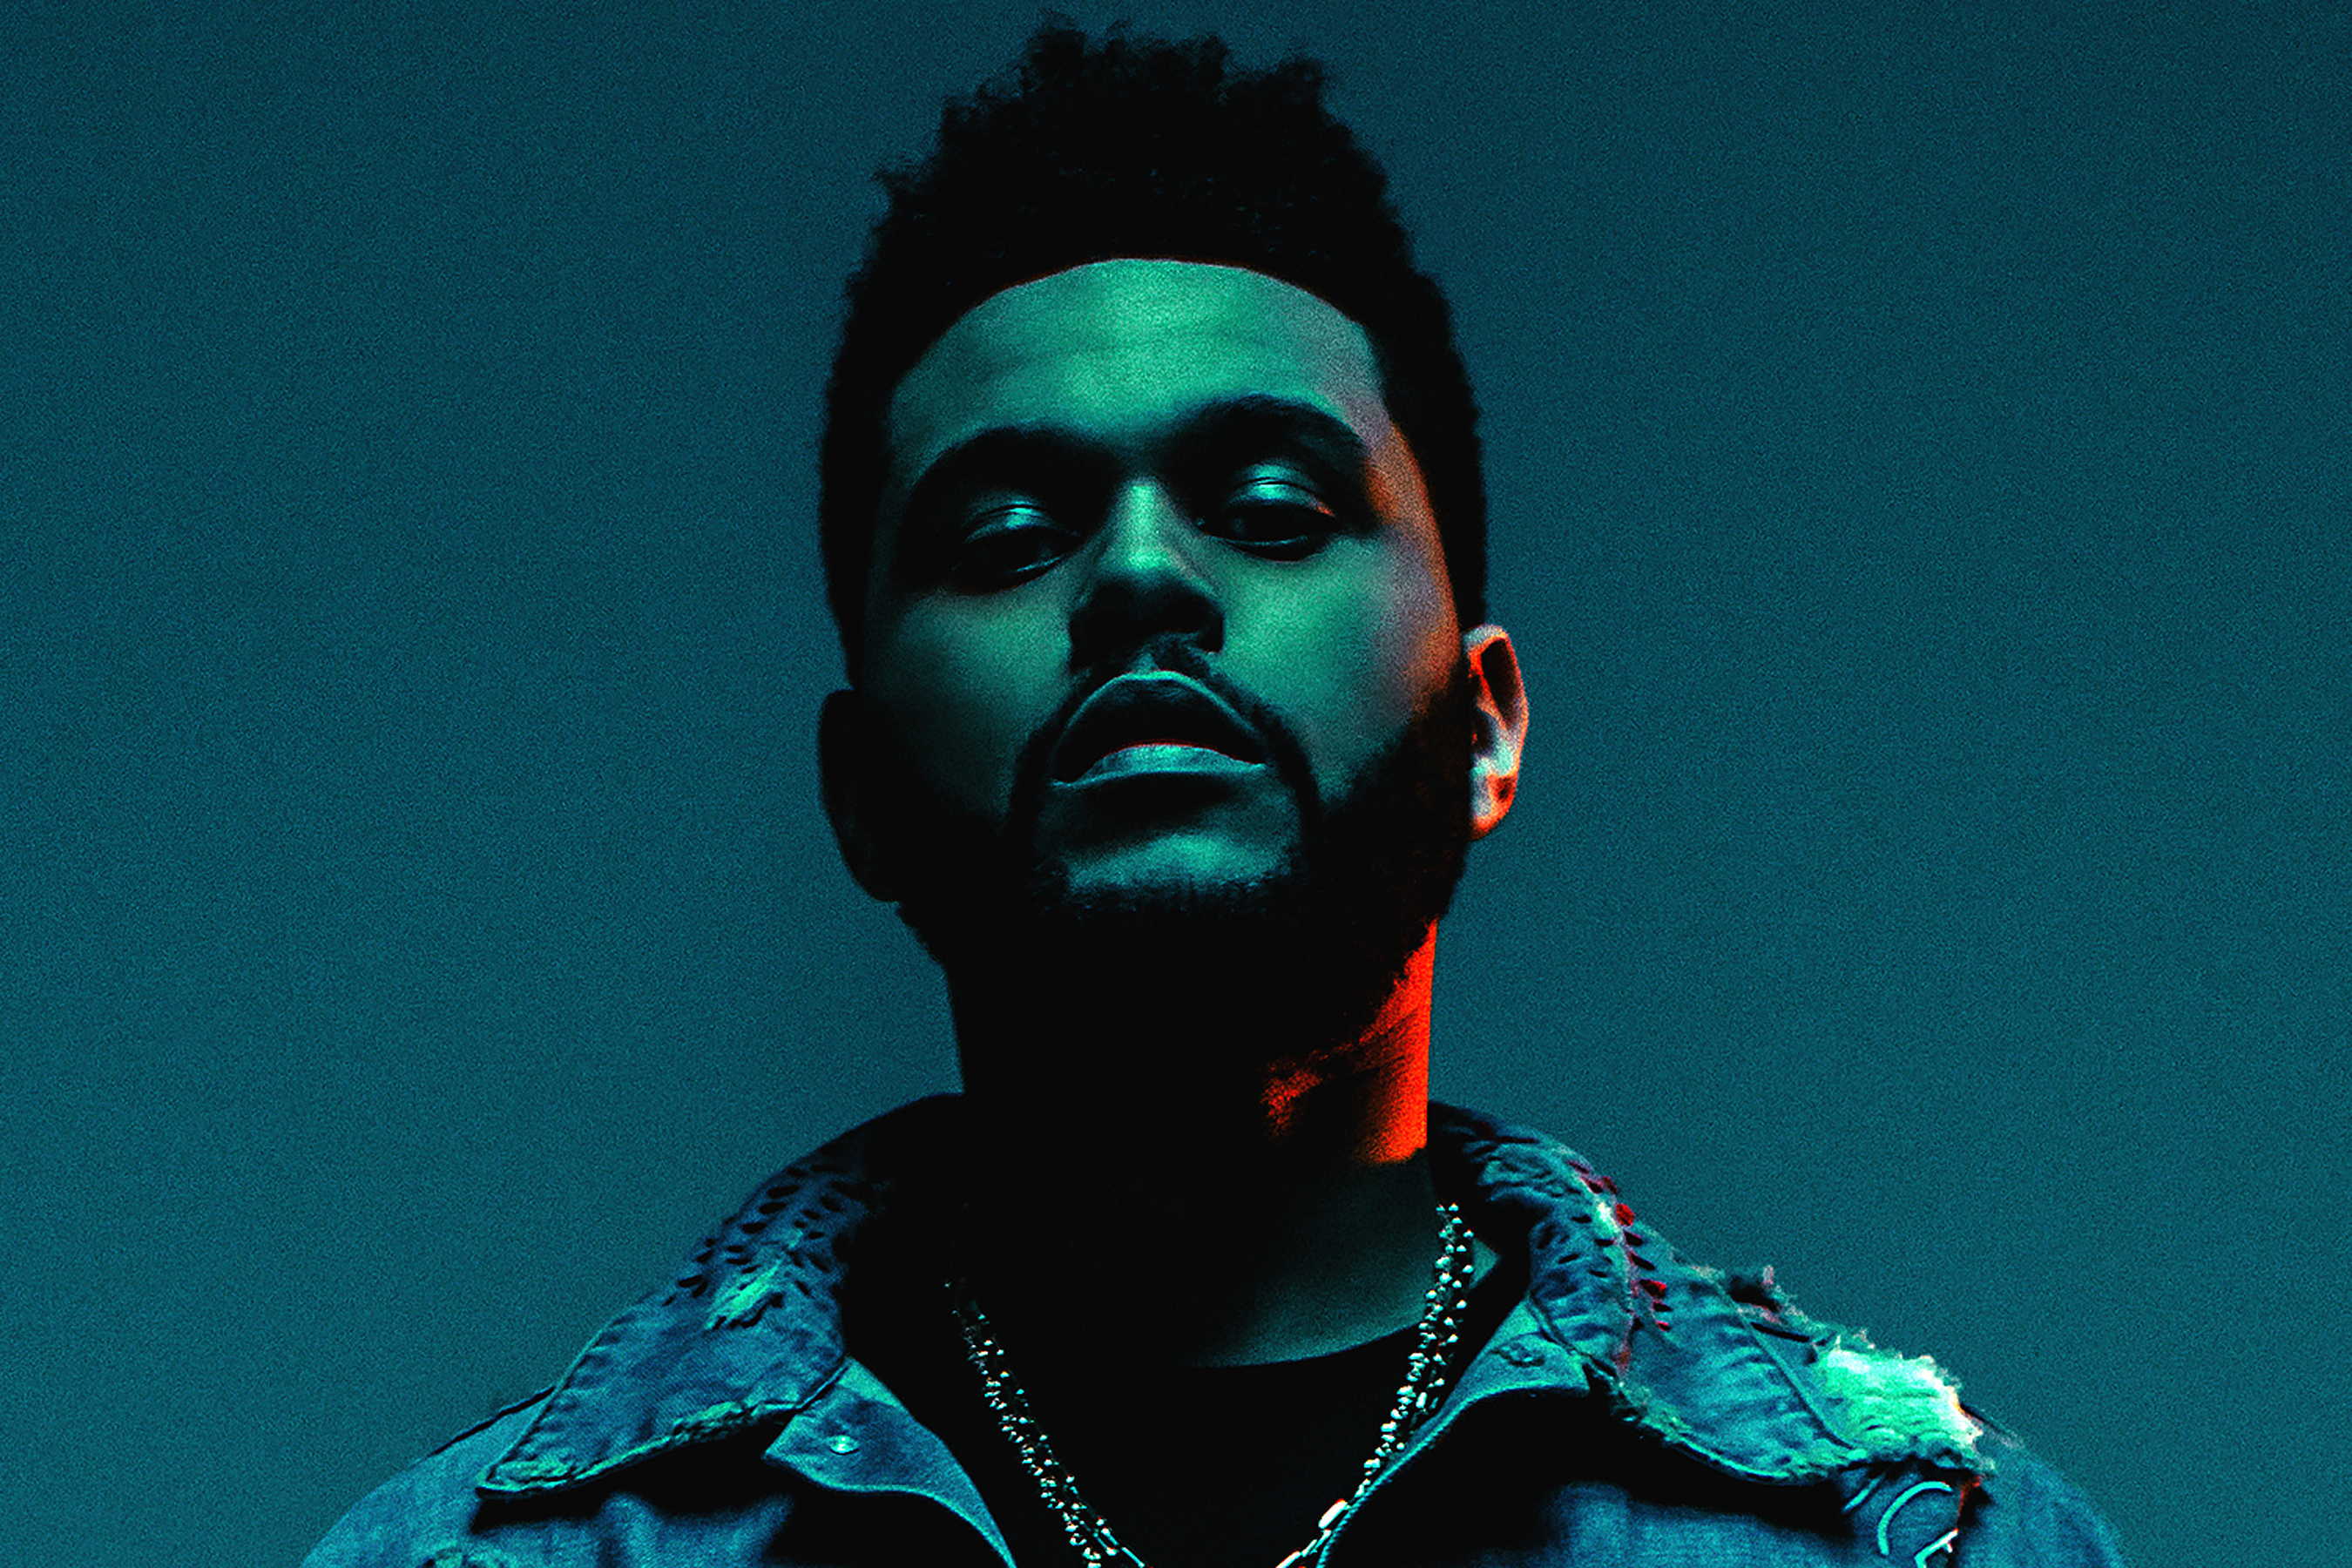 Again the weekend. The Weeknd. Певец the Weeknd. Эйбел Макконен Тесфайе. Abel the Weeknd.